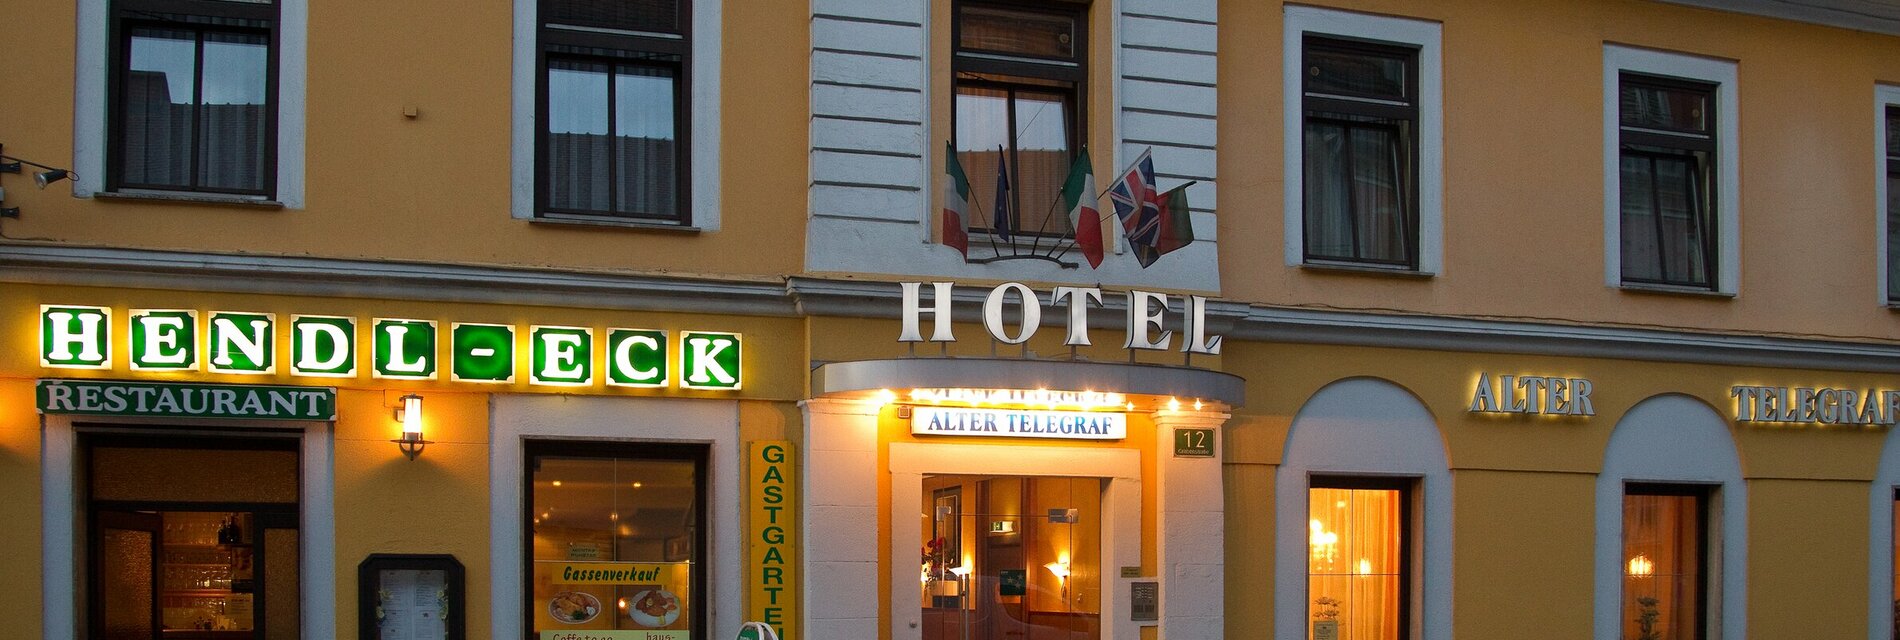 Hotel Alter Telegraf 